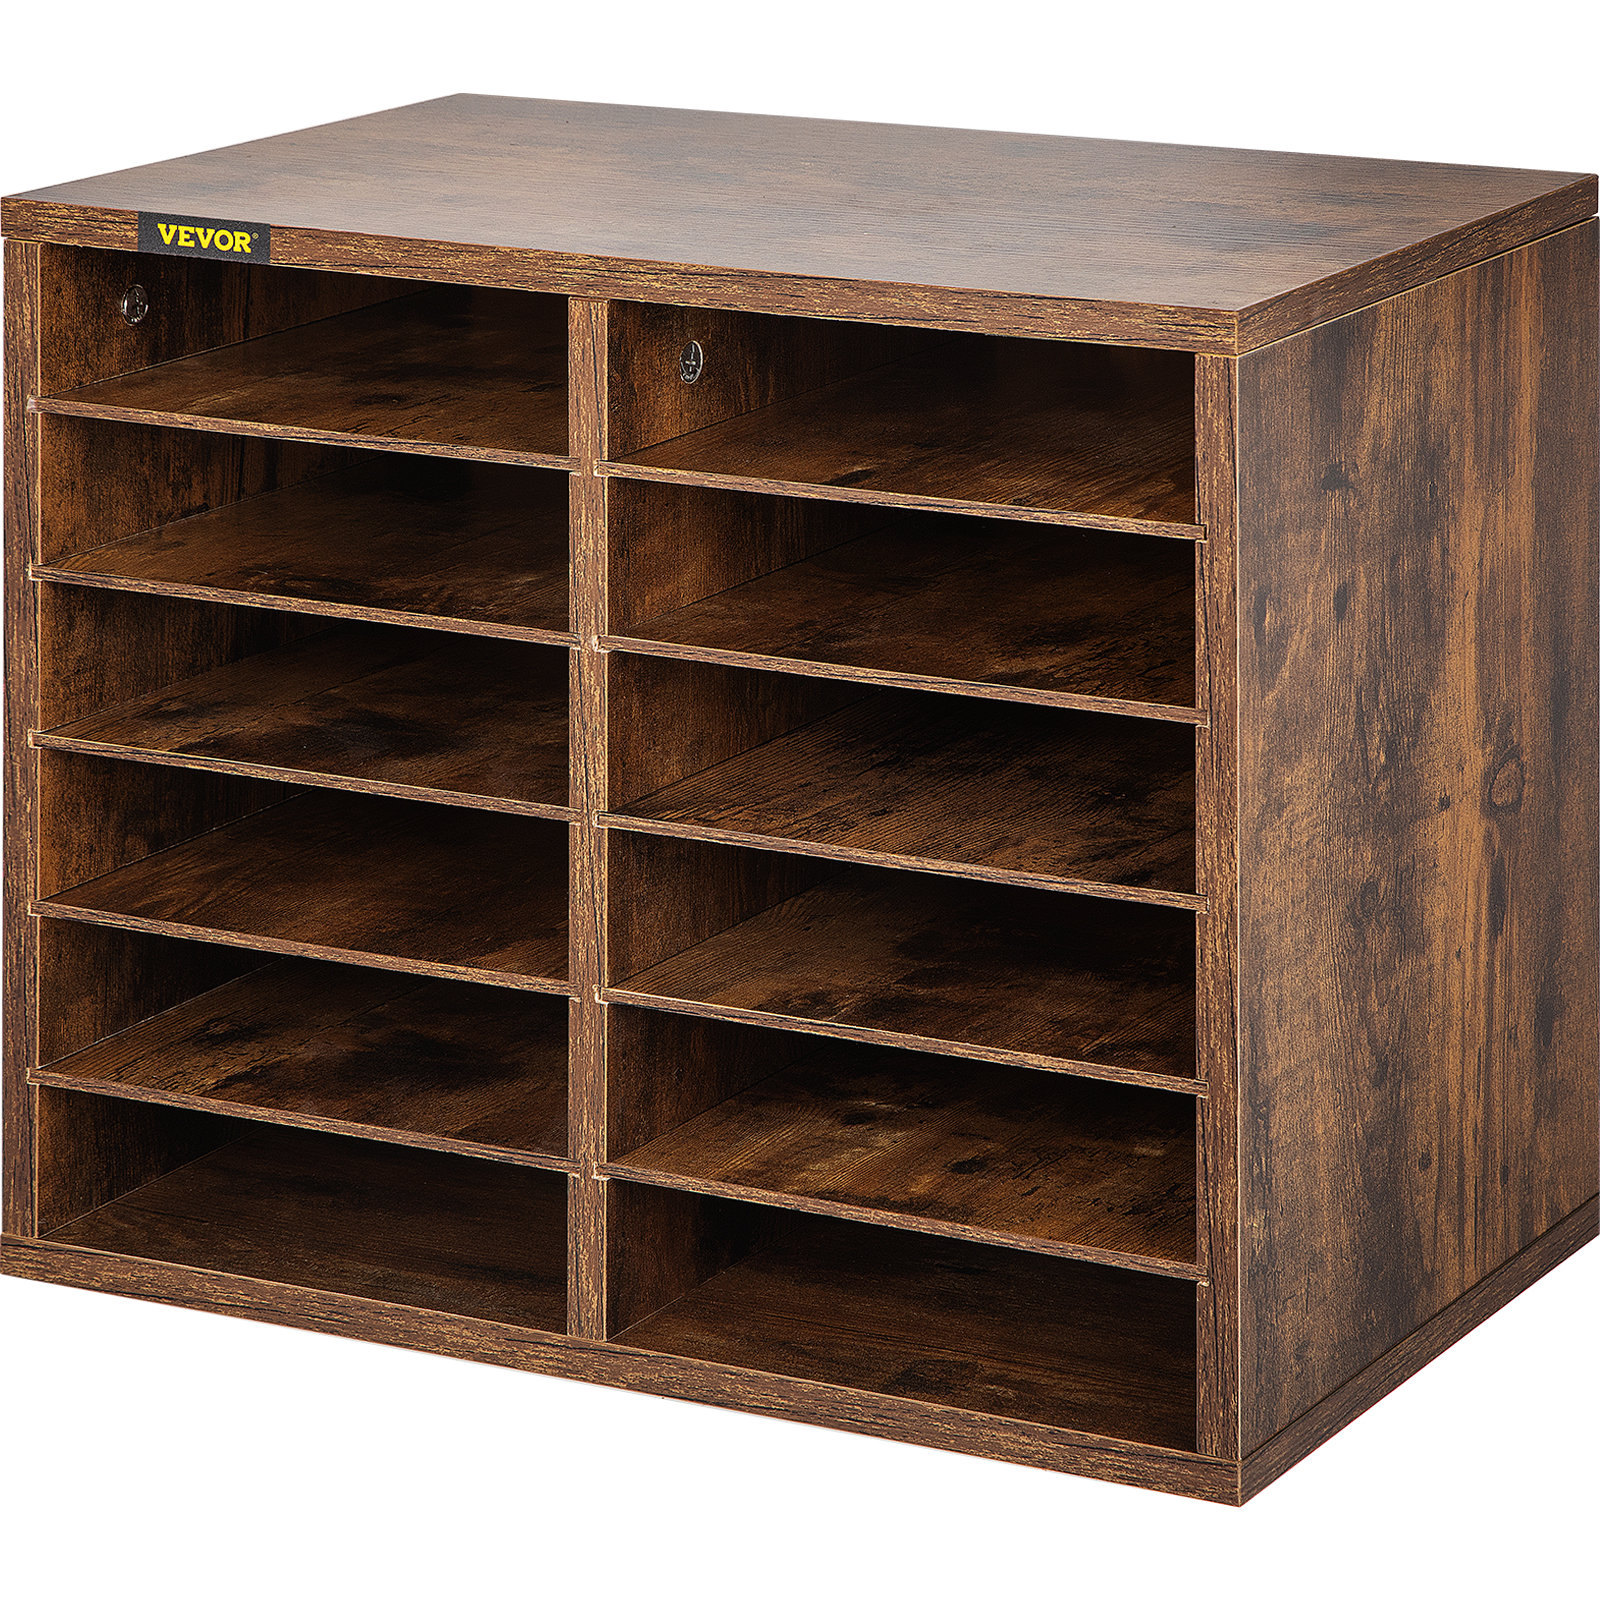 VEVOR Wood Literature Organizer 12 Compartments Adjustable Shelves Medium Density Fiberboard Mail Center Office Home School Storage for Files